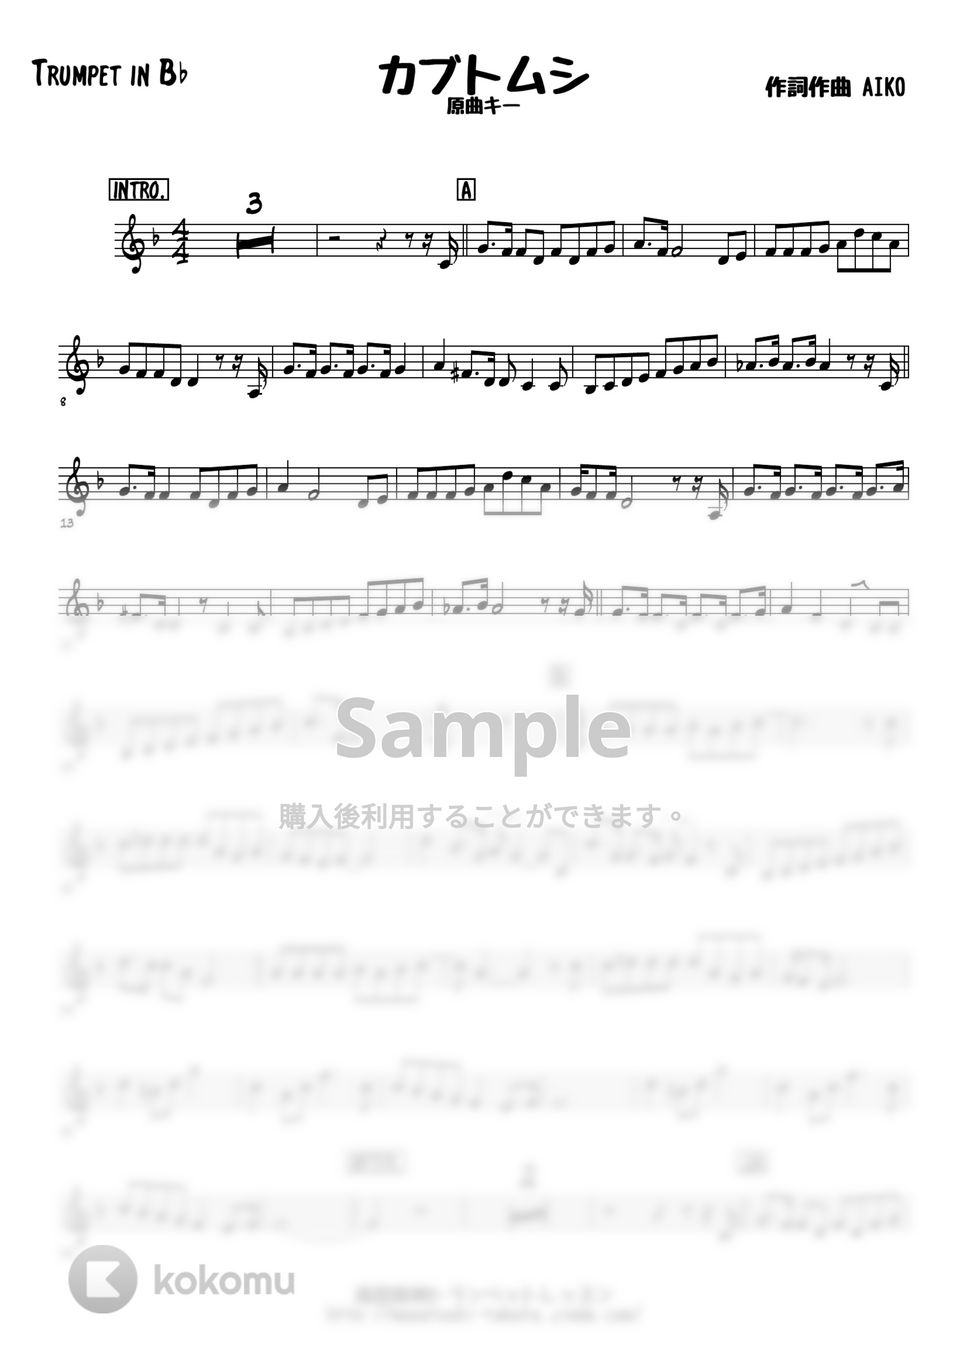 aiko - カブトムシ (トランペットメロディー楽譜) by 高田将利